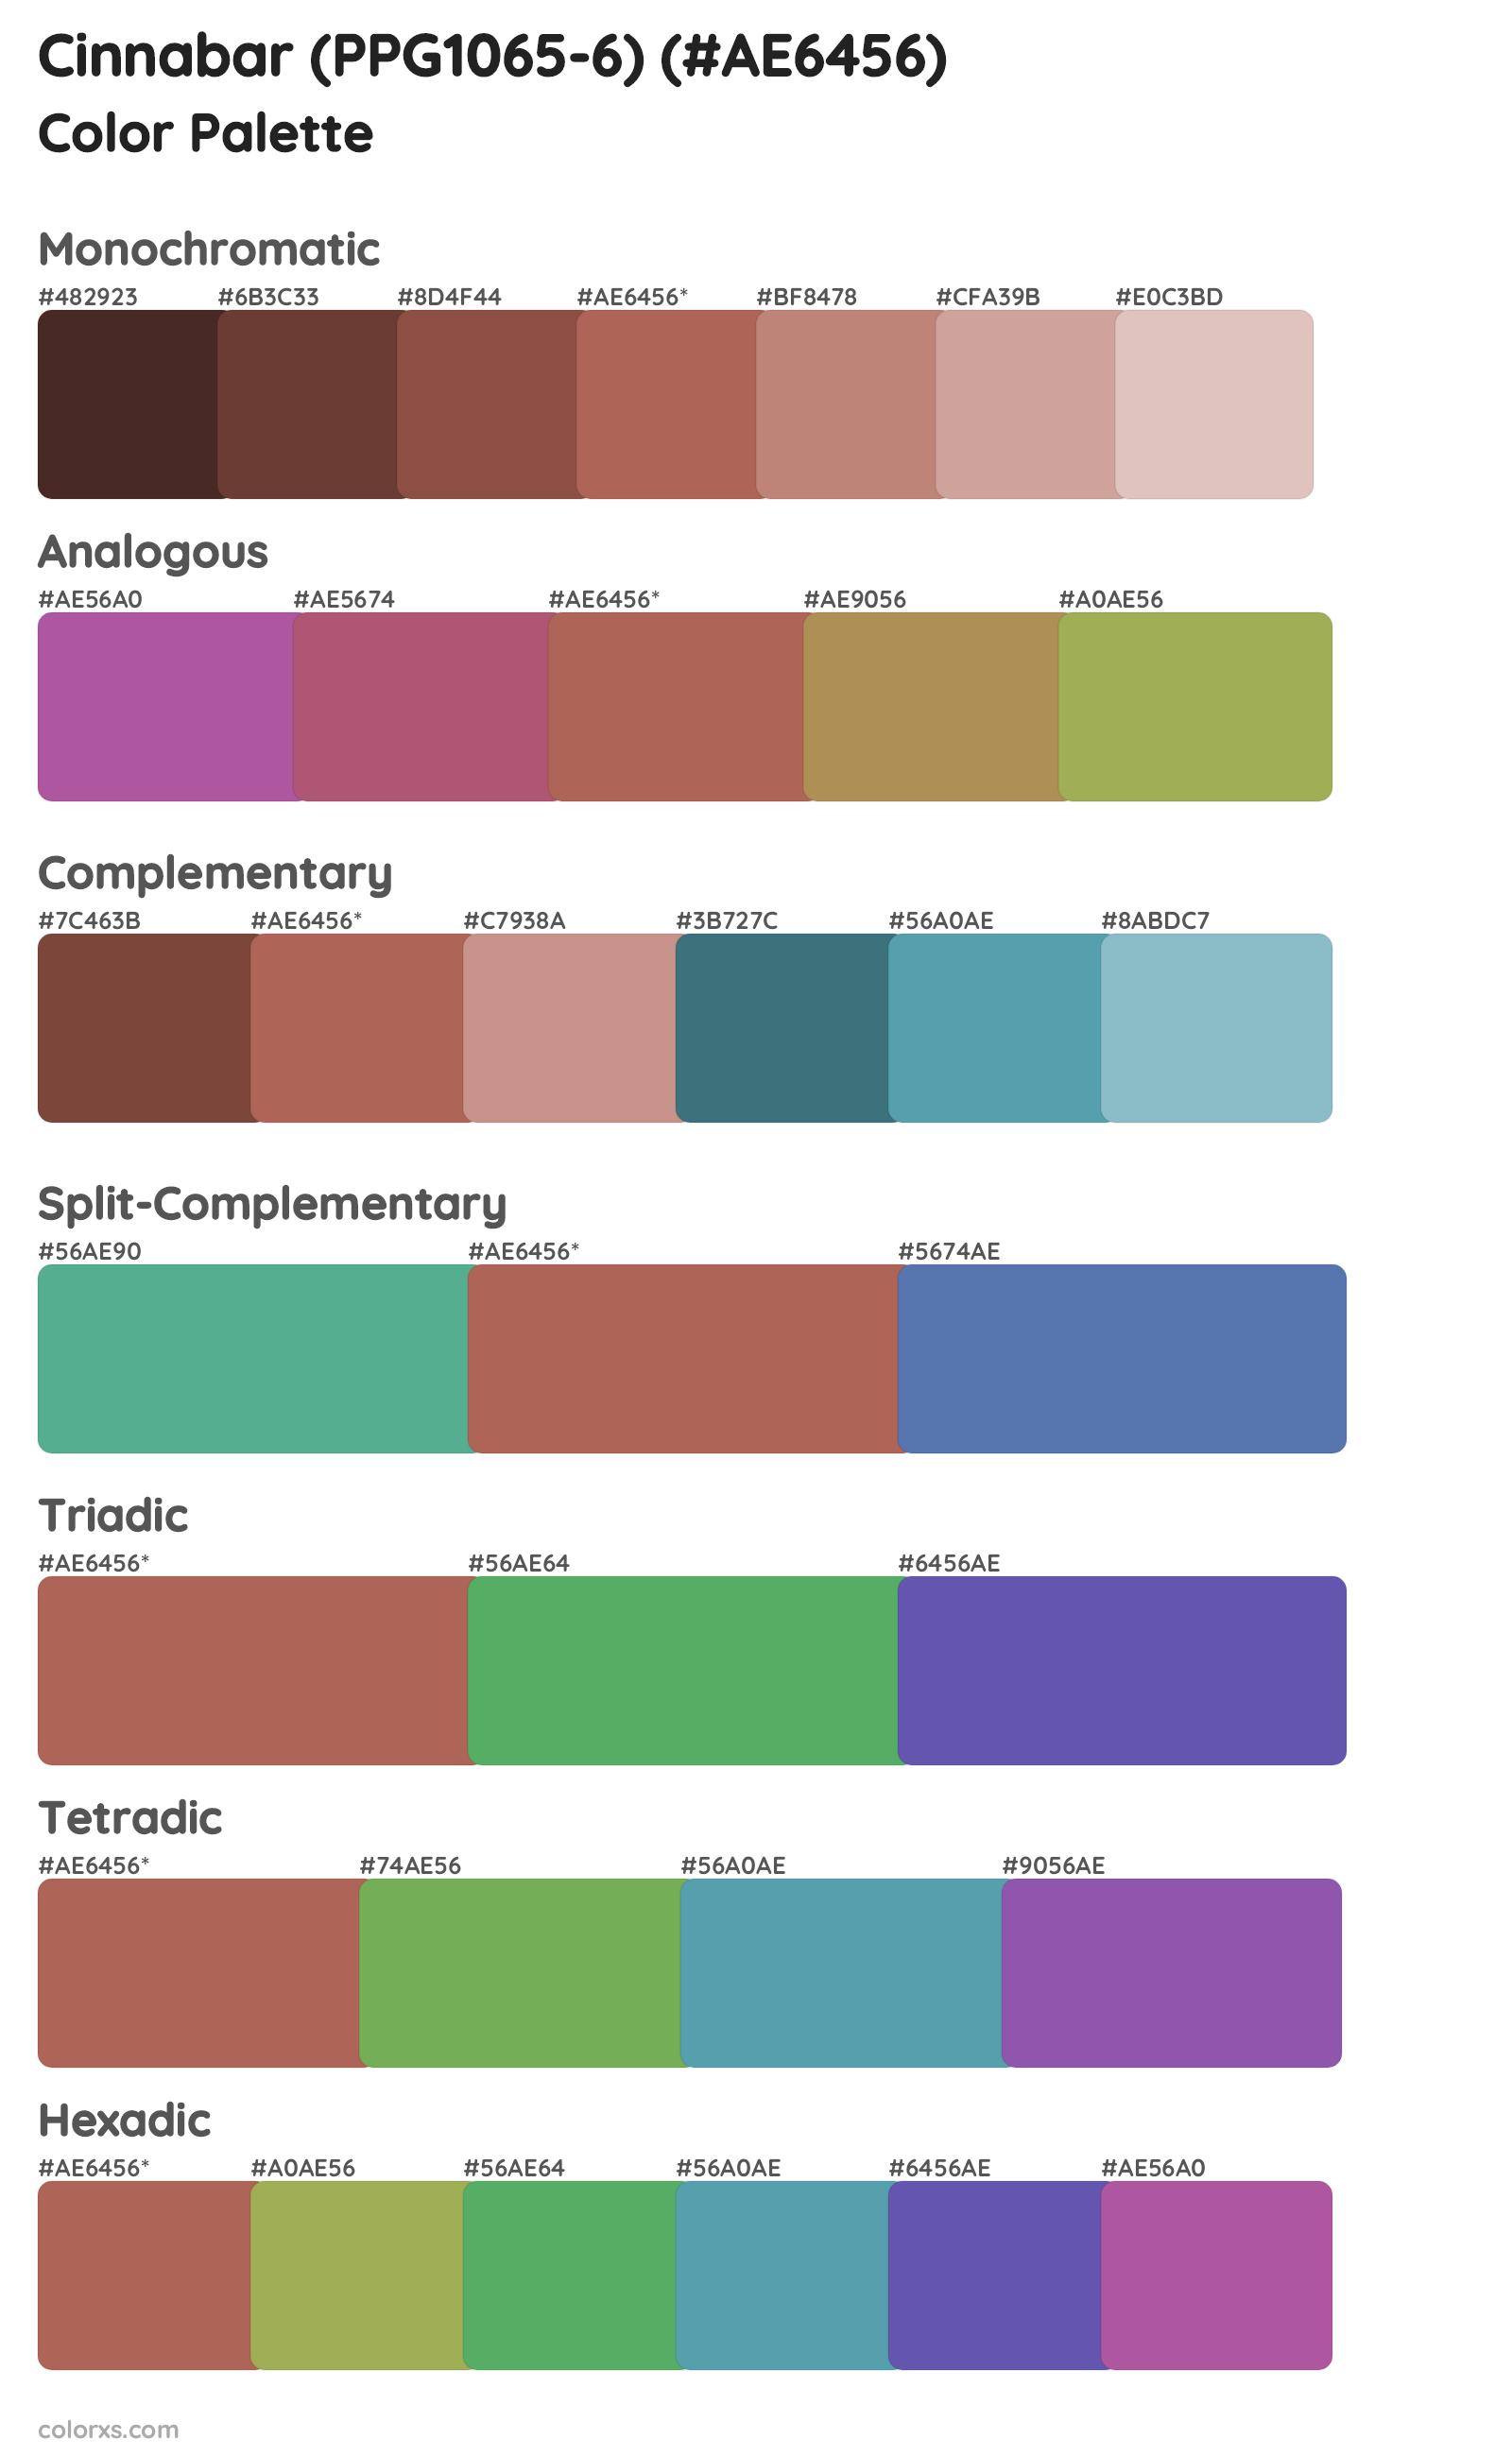 Cinnabar (PPG1065-6) Color Scheme Palettes